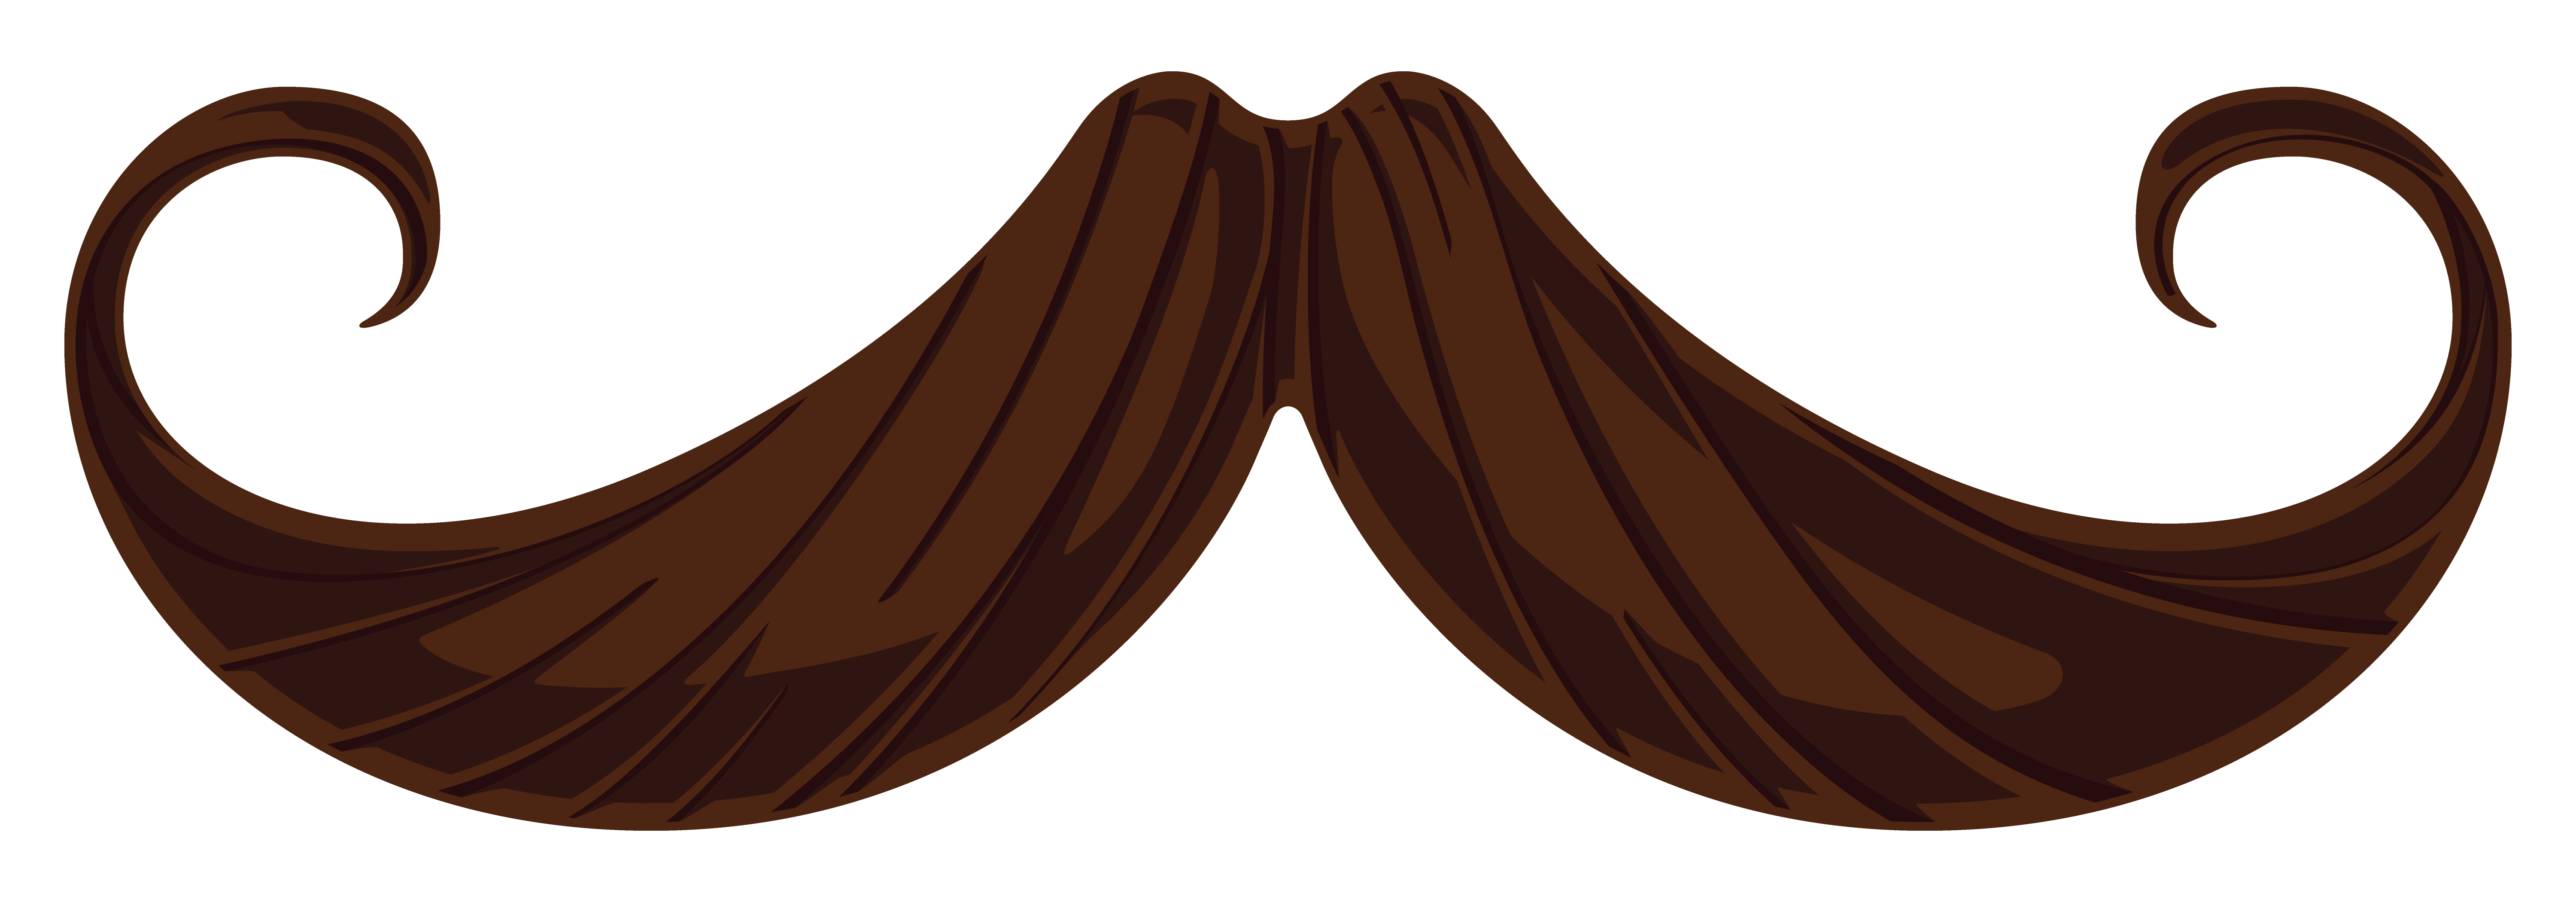 Brown mustache clipart